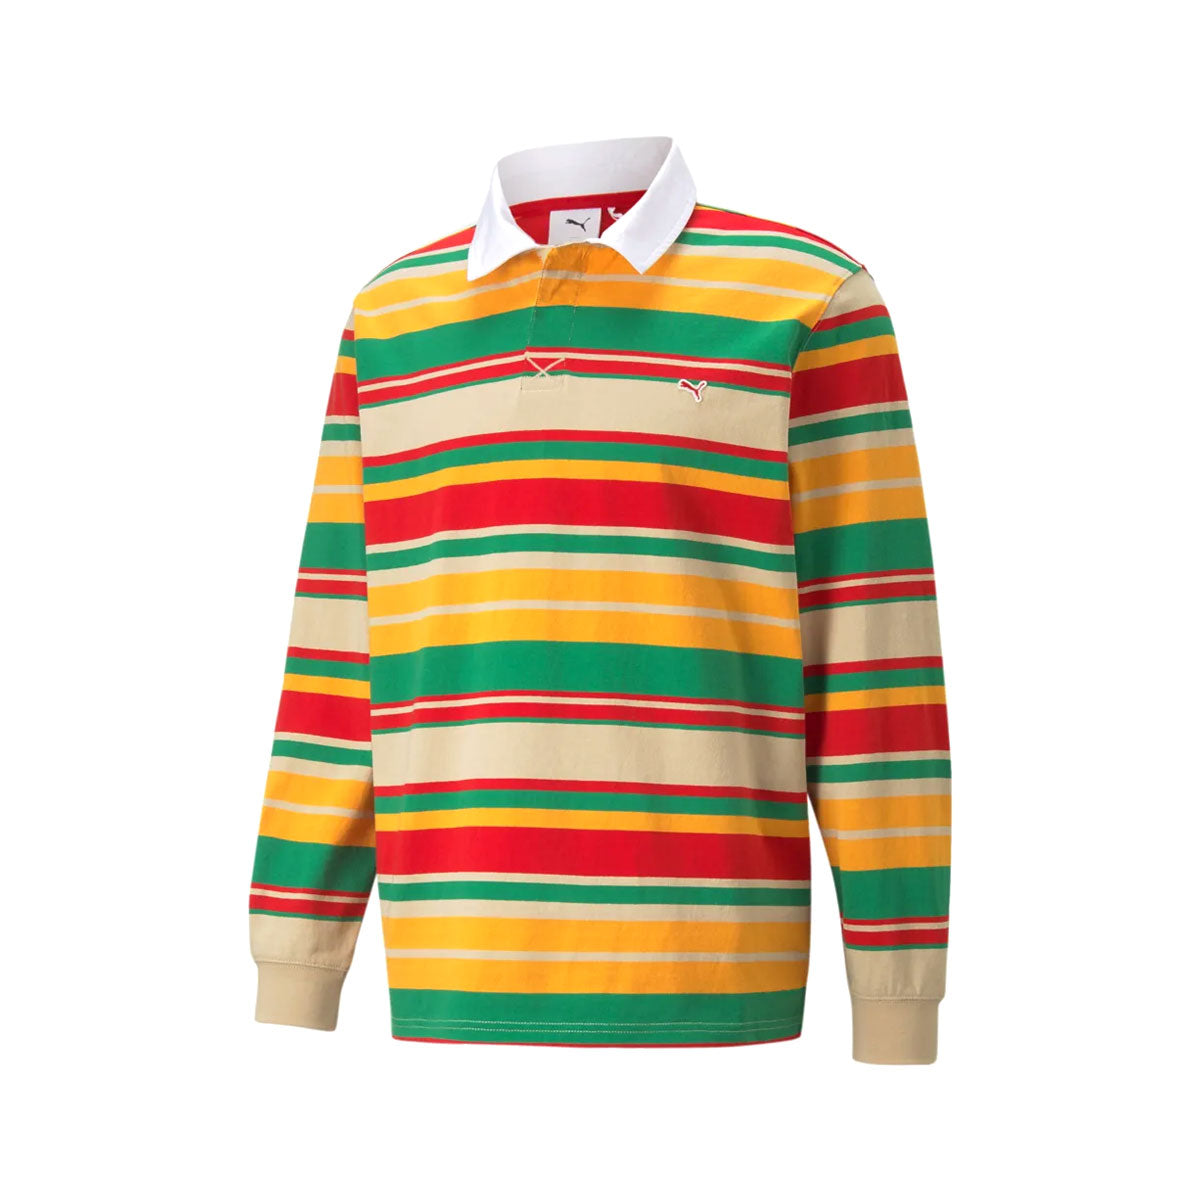 PUMA x A.C. MILAN Sleeve Polo Shirt Men's - KickzStore